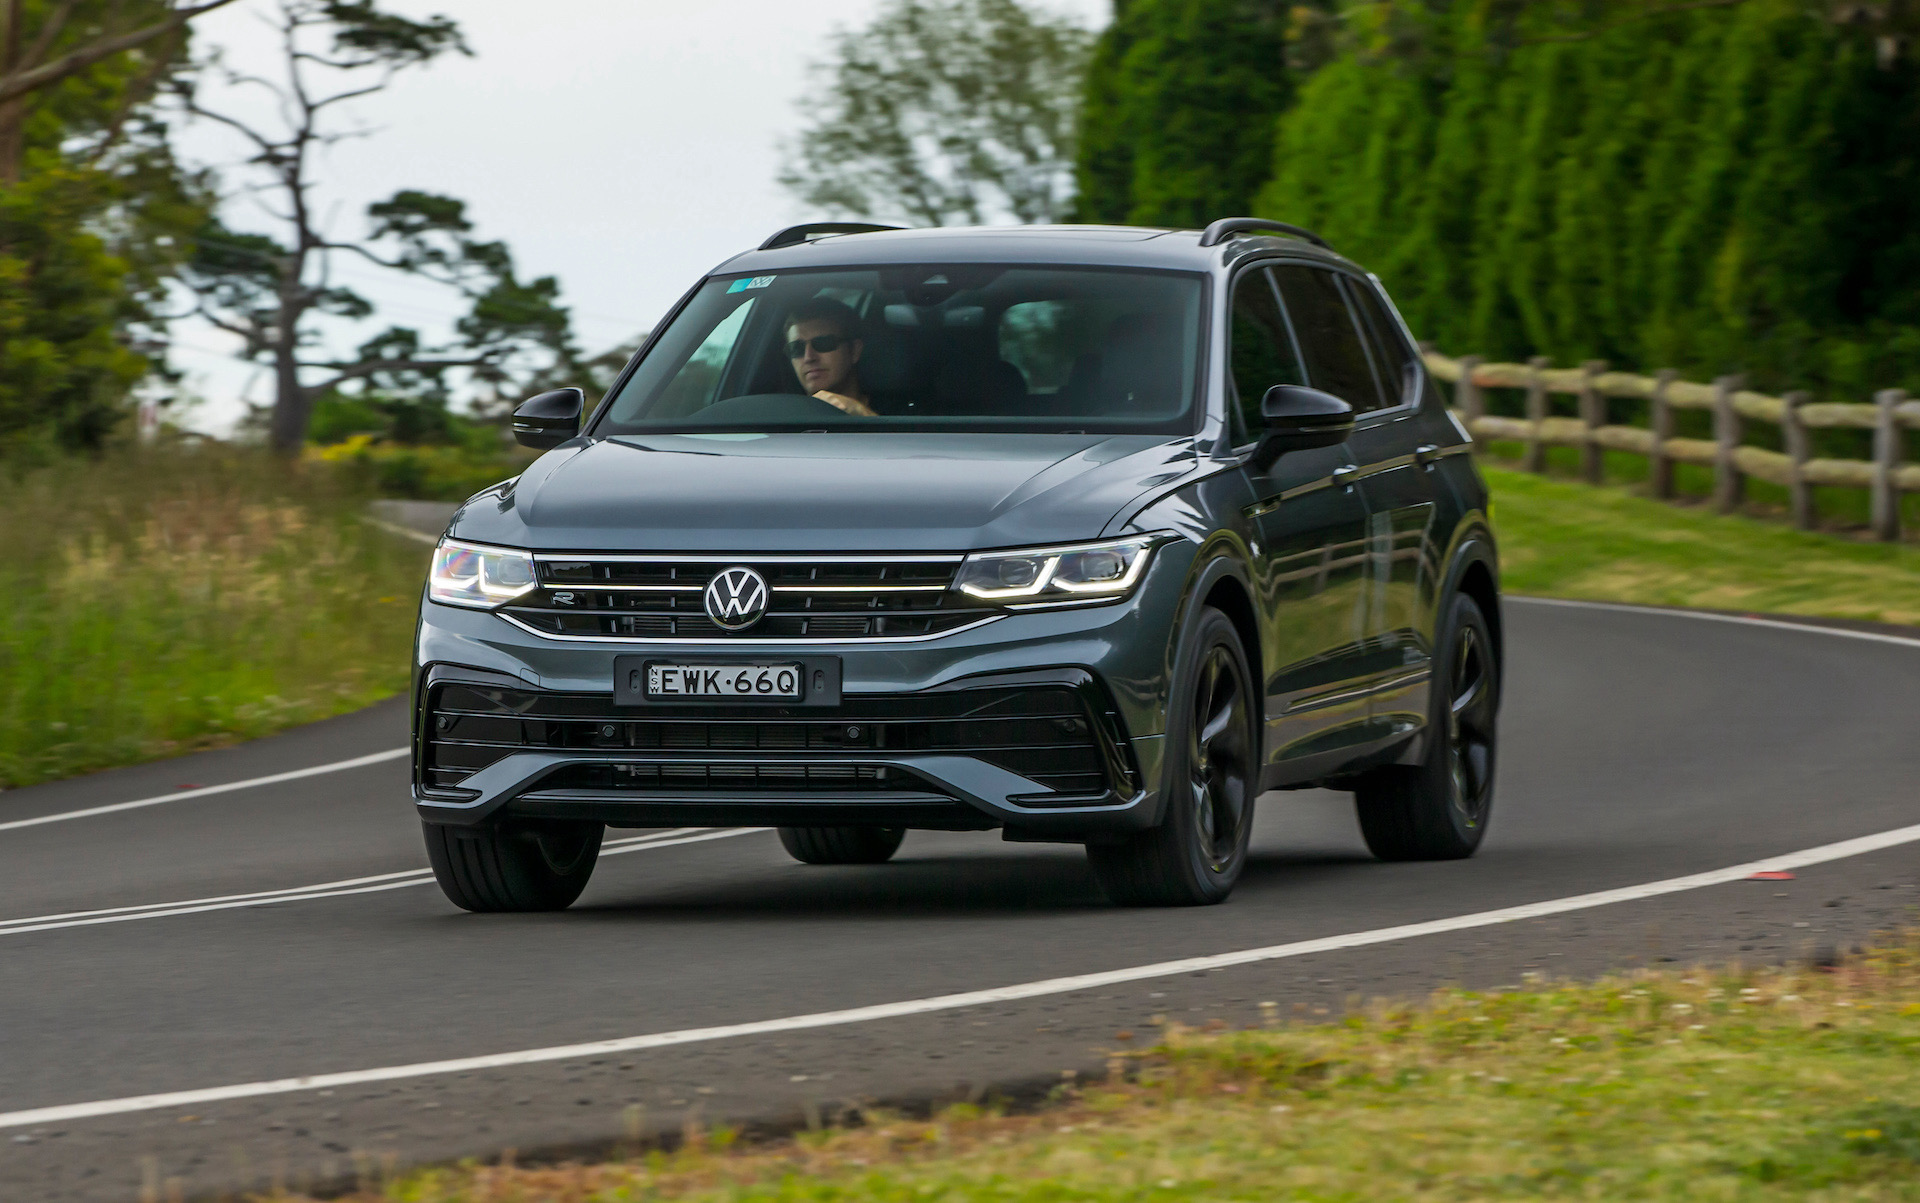 Volkswagen adds Monochrome variant to Tiguan range in Australia